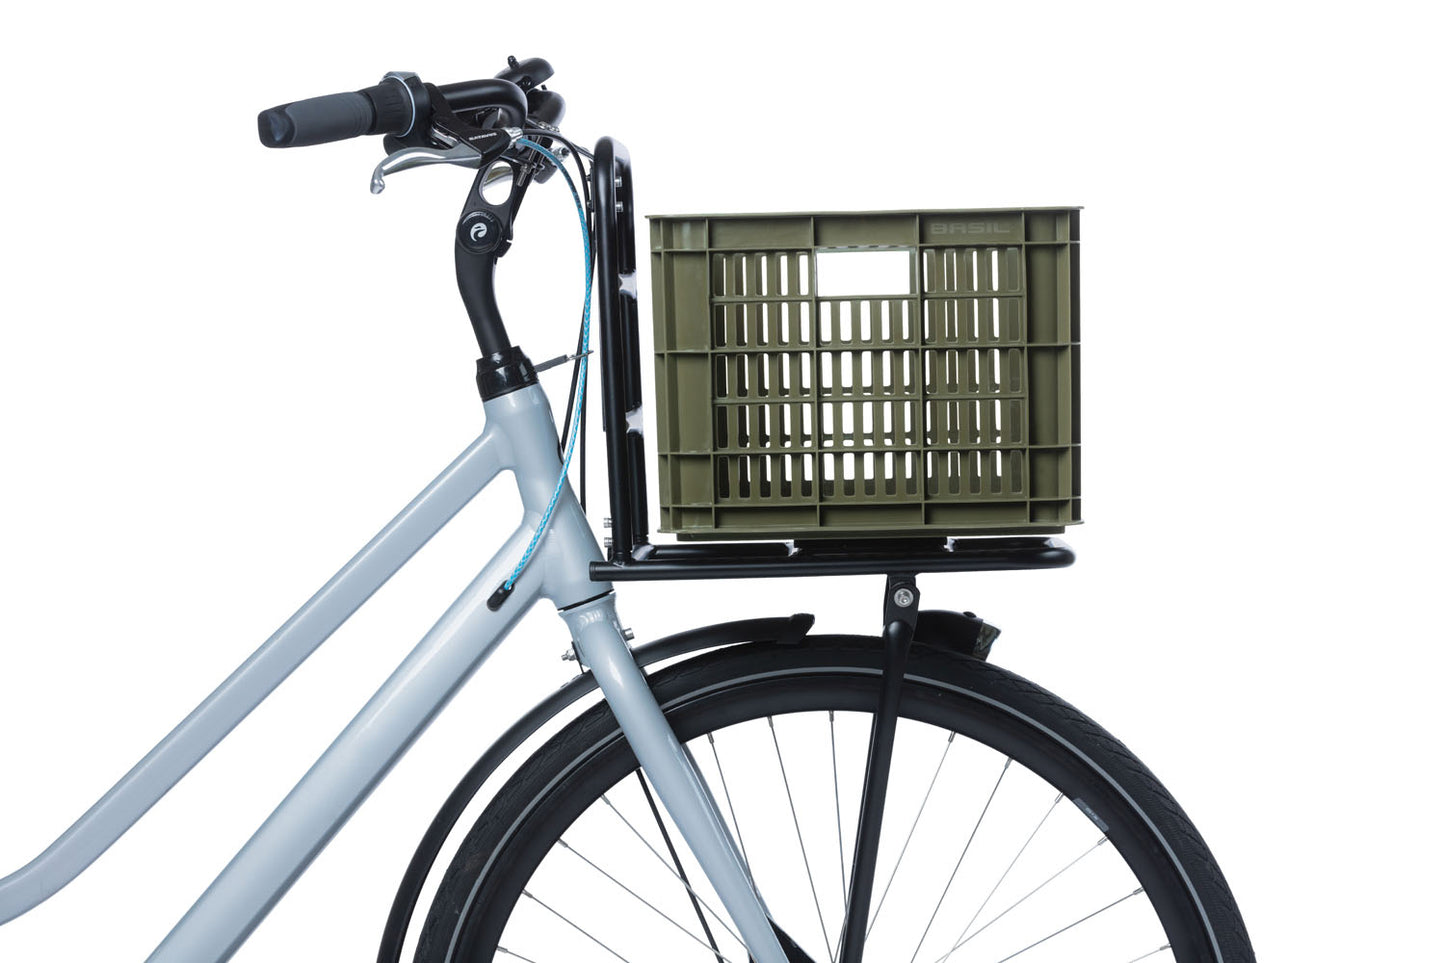 Basil fietskrat M - medium - 29.5 liter - groen